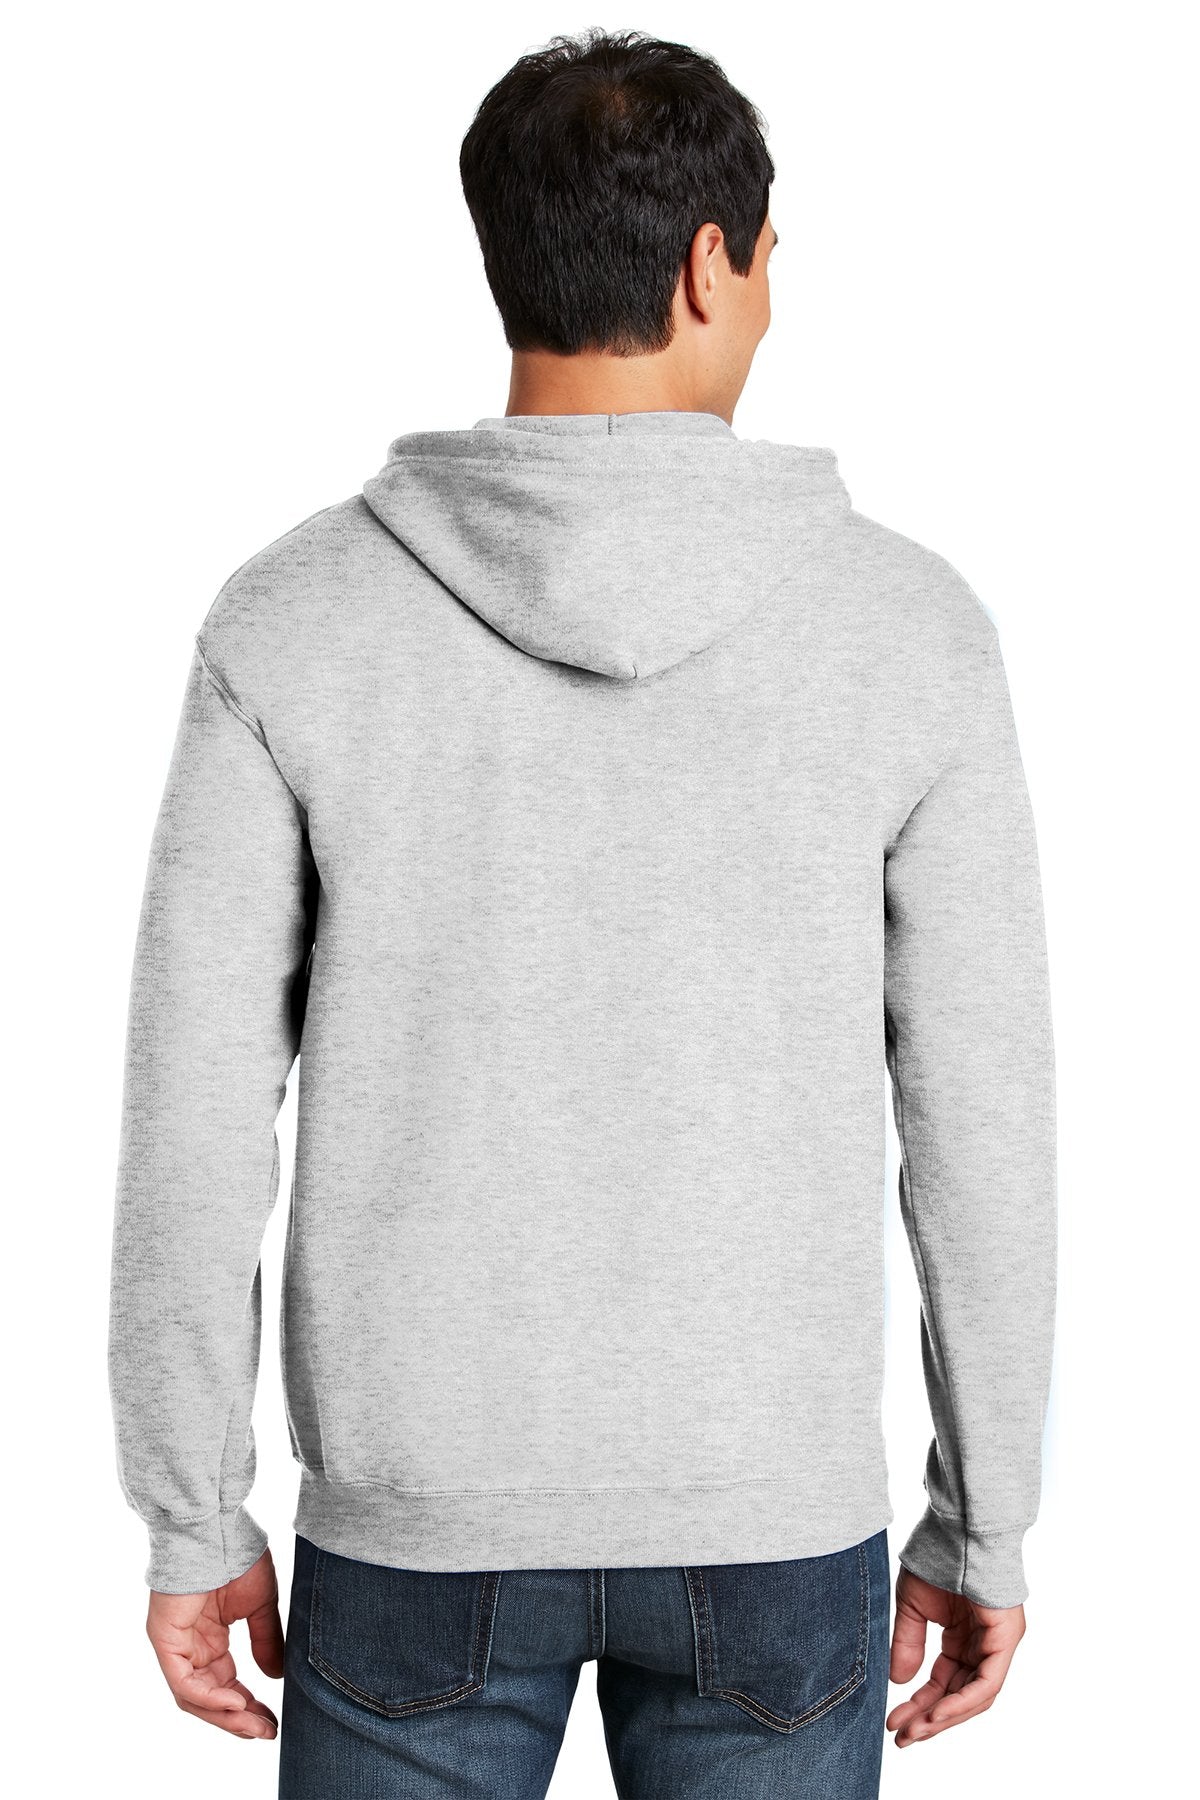 Gildan Heavy Blend Full Zip Hooded Sweatshirt Ash Grey